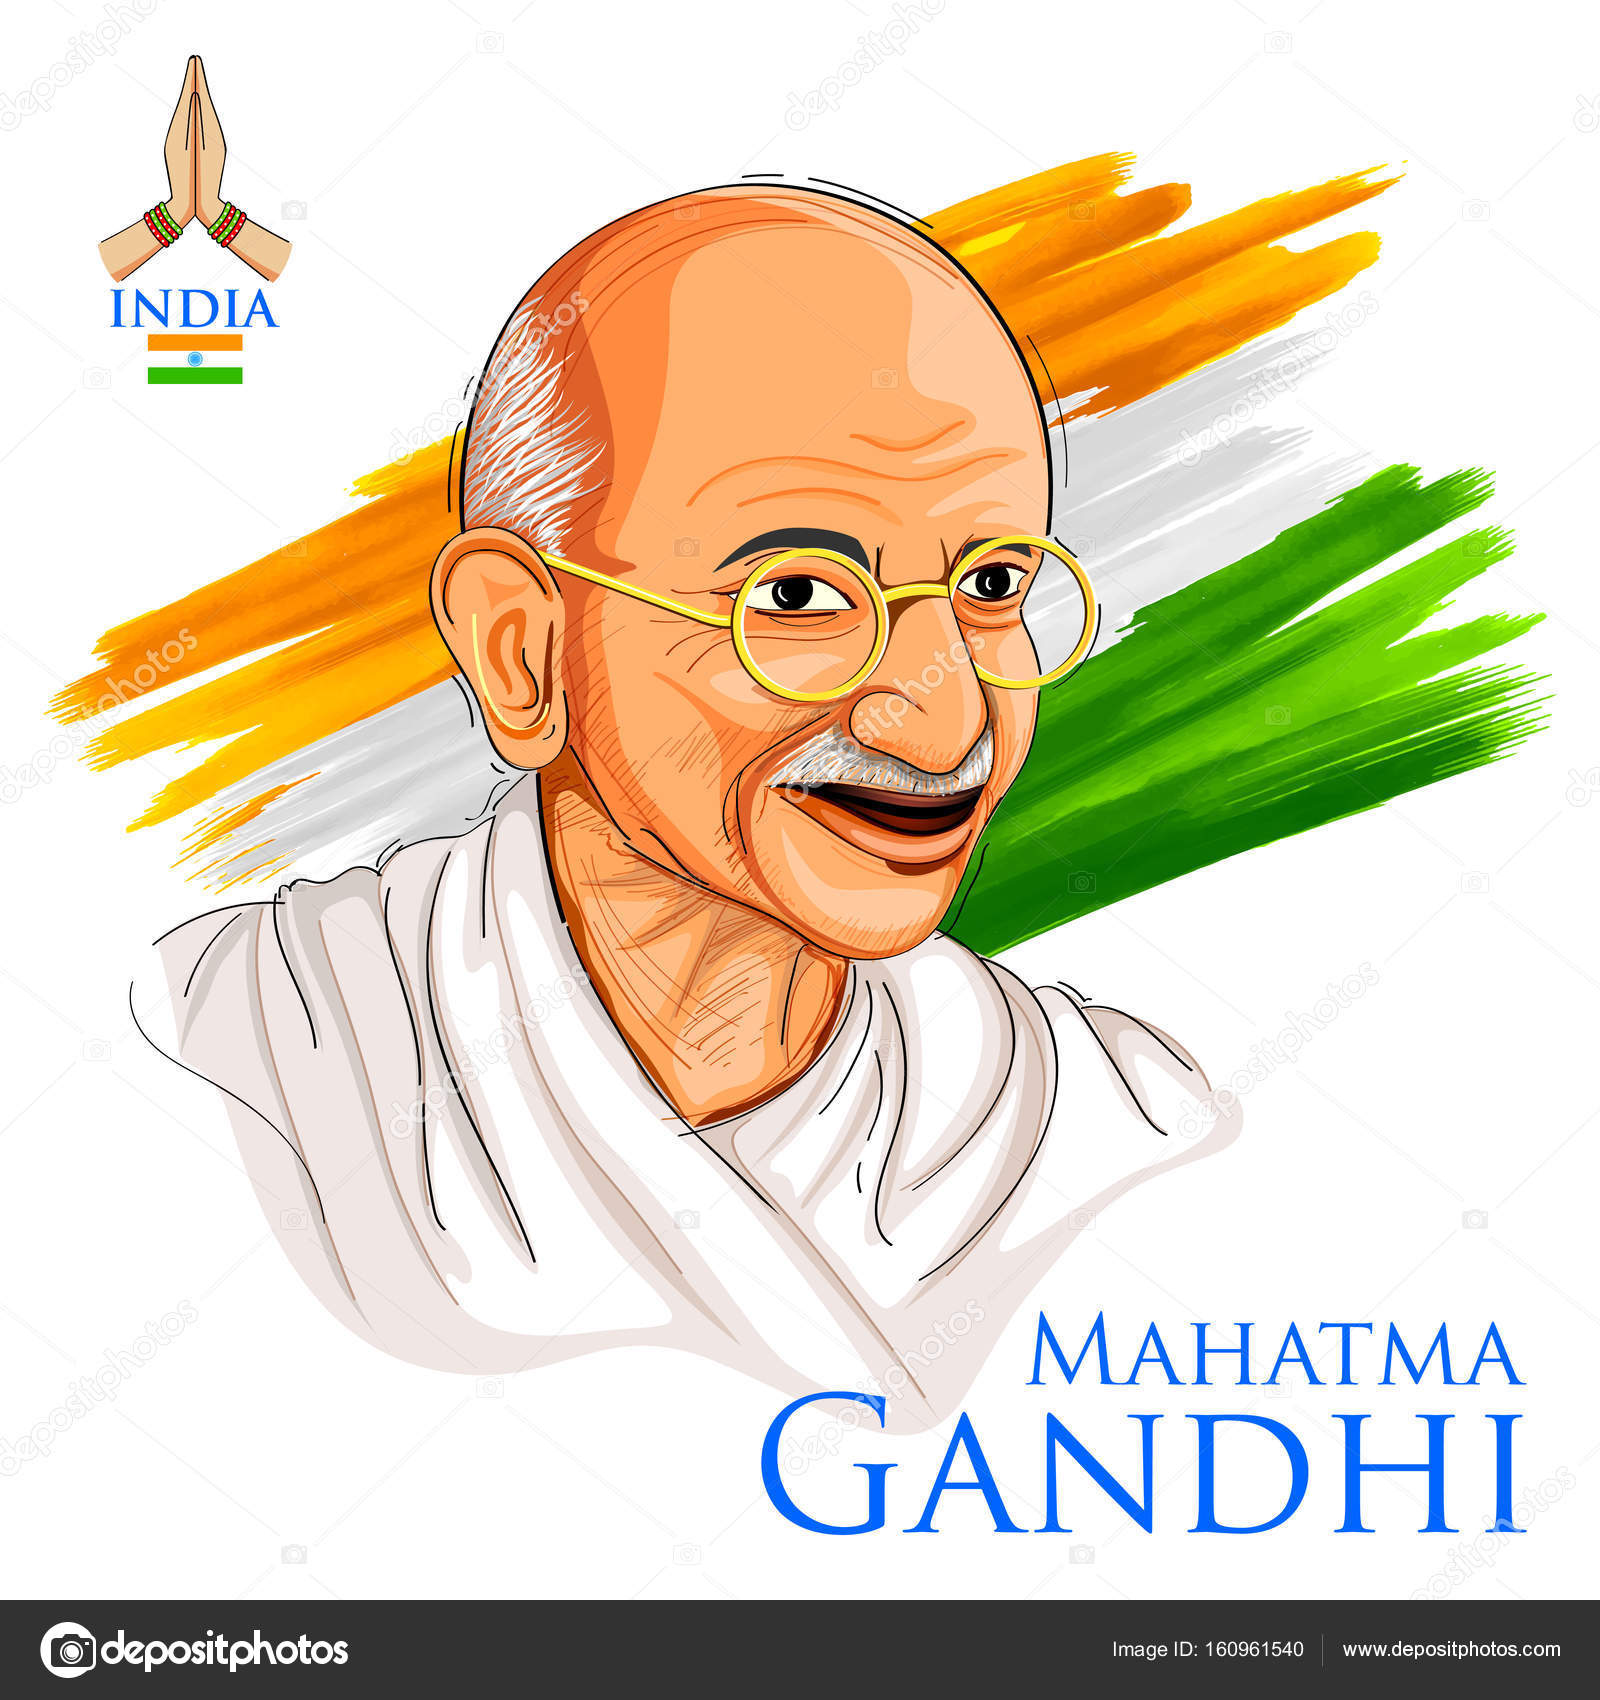 Mahatma gandhi Vector Art Stock Images | Depositphotos